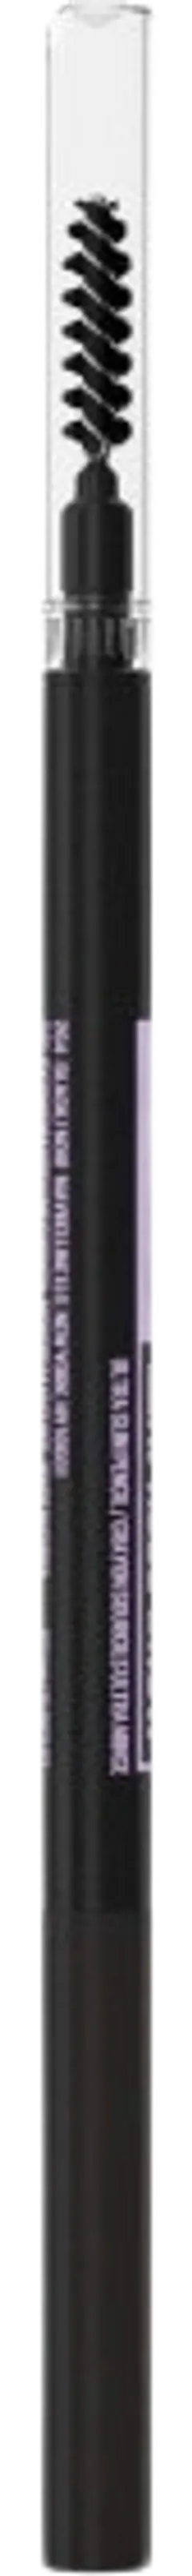 Maybelline New York Express Brow Ultra Slim 07 Black -kulmakynä 0,84g - 3